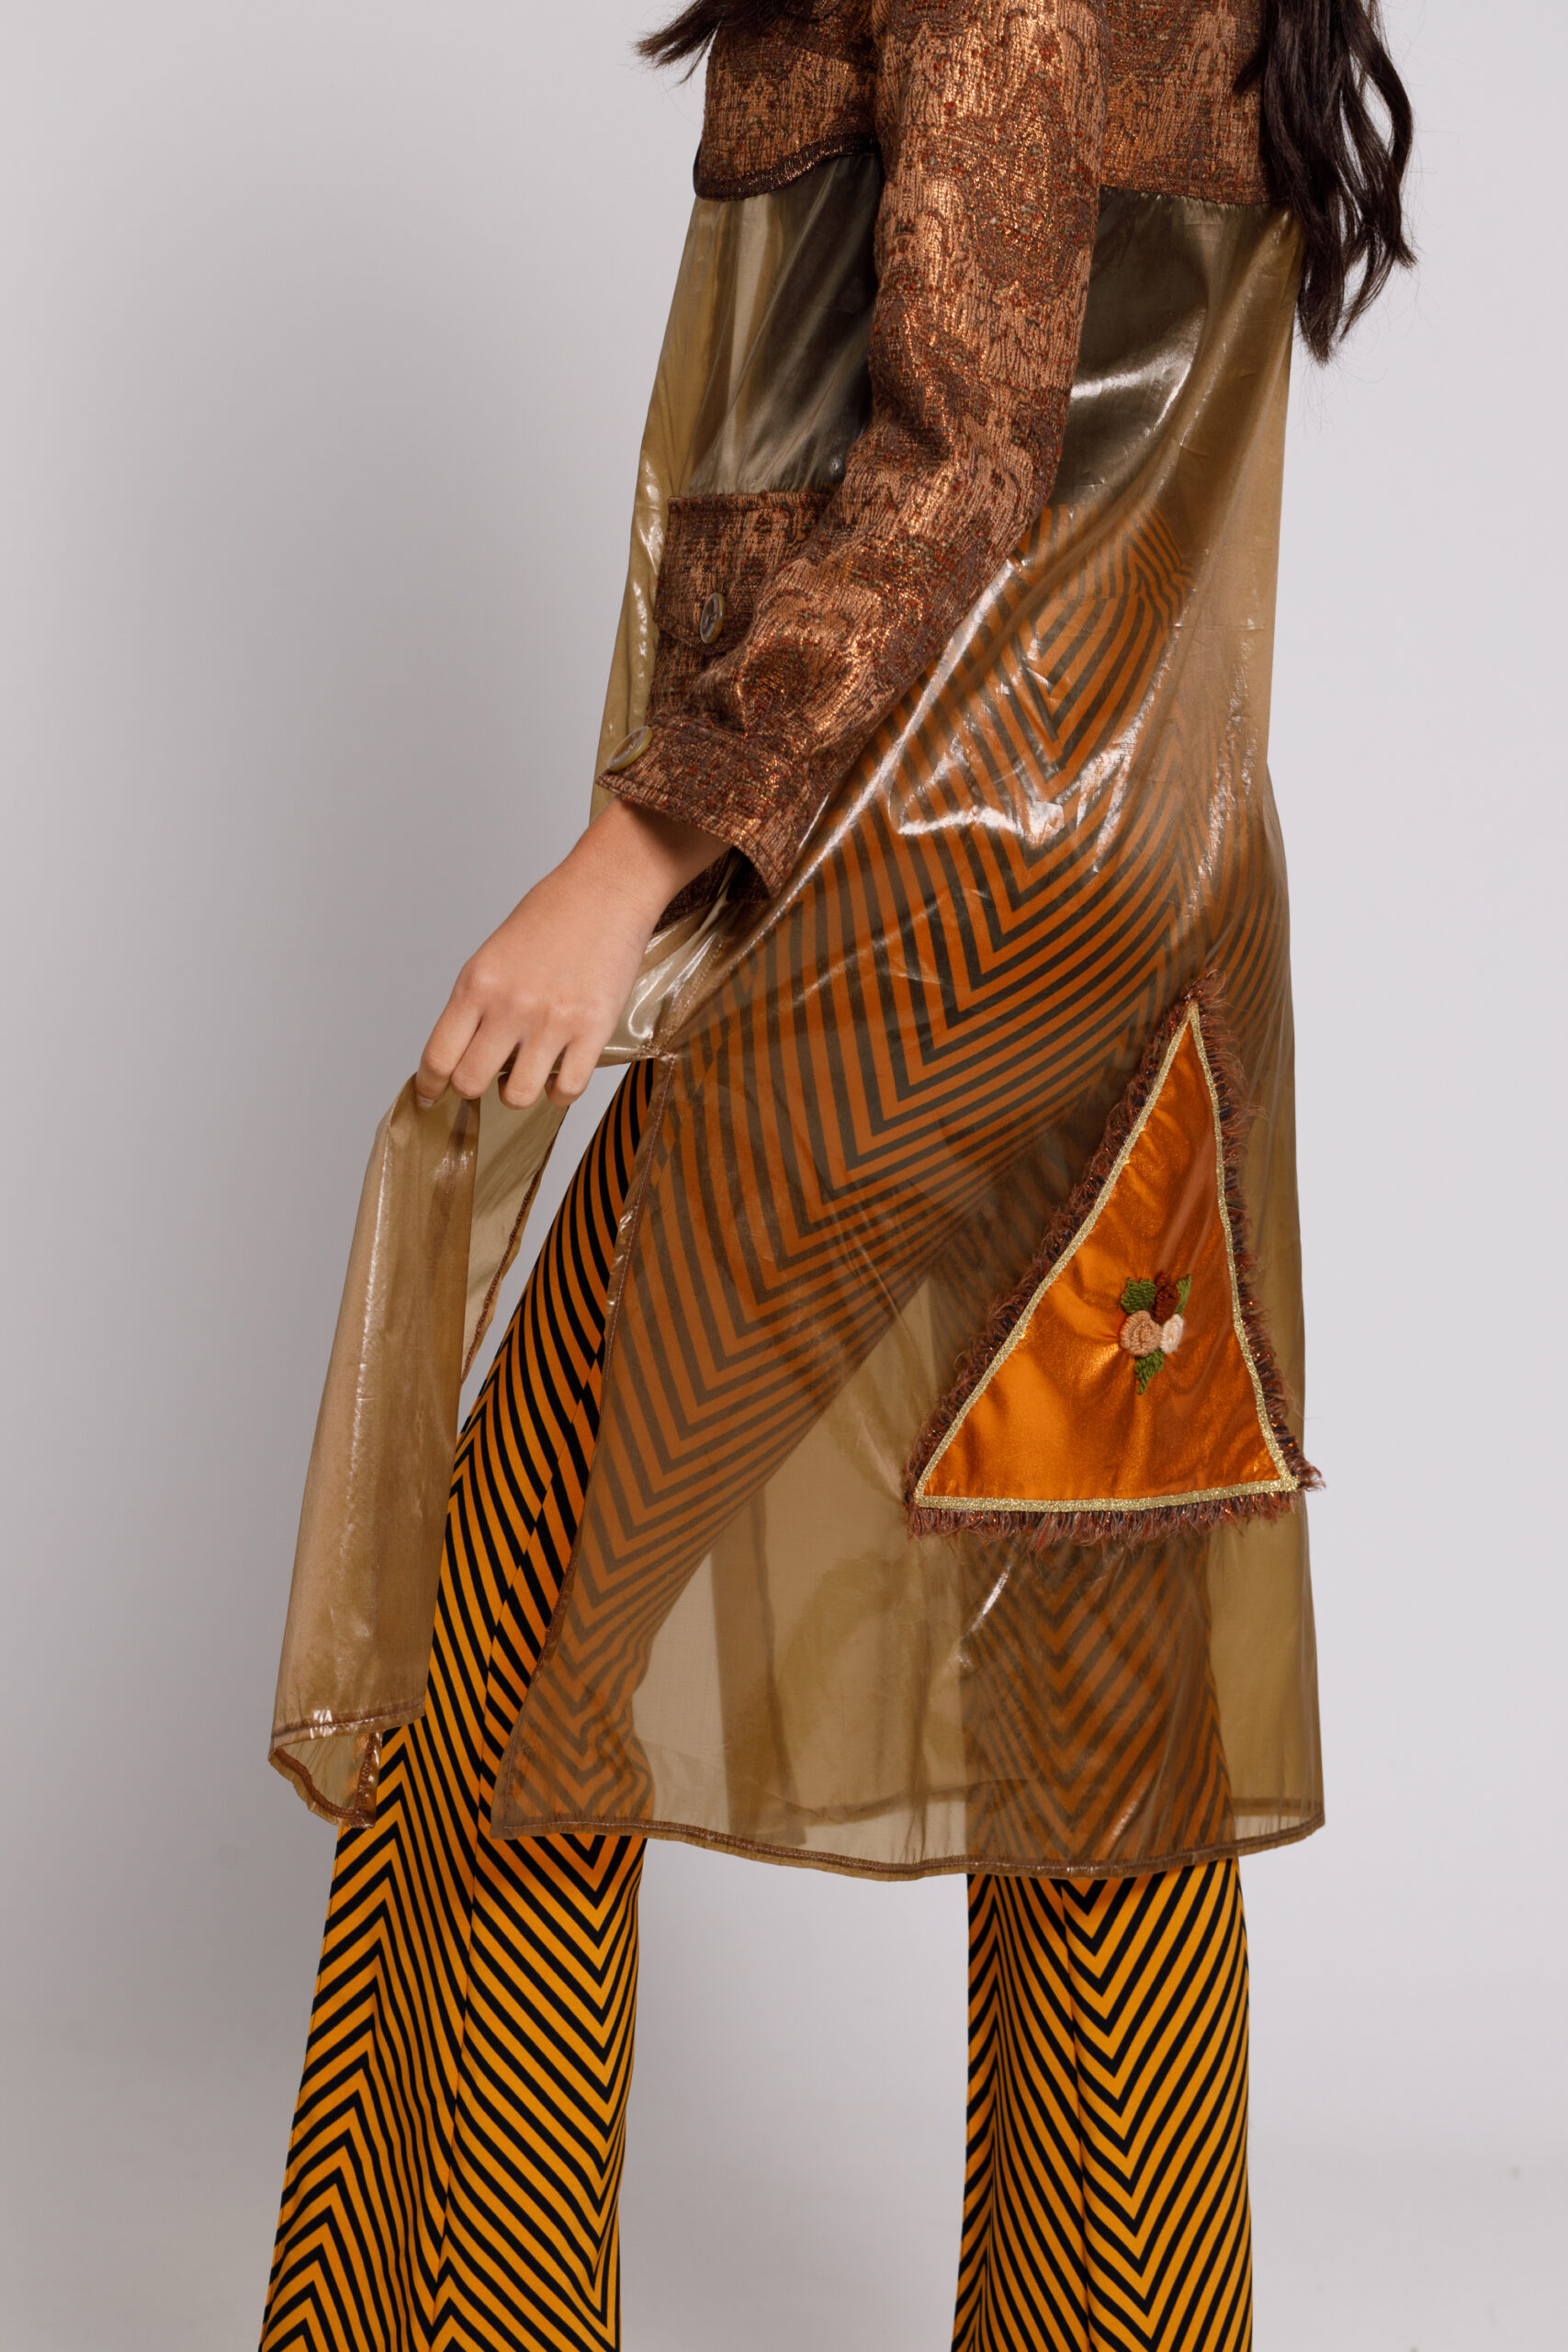 DORIS casual in copper brocade and organza Jacket. Natural fabrics, original design, handmade embroidery